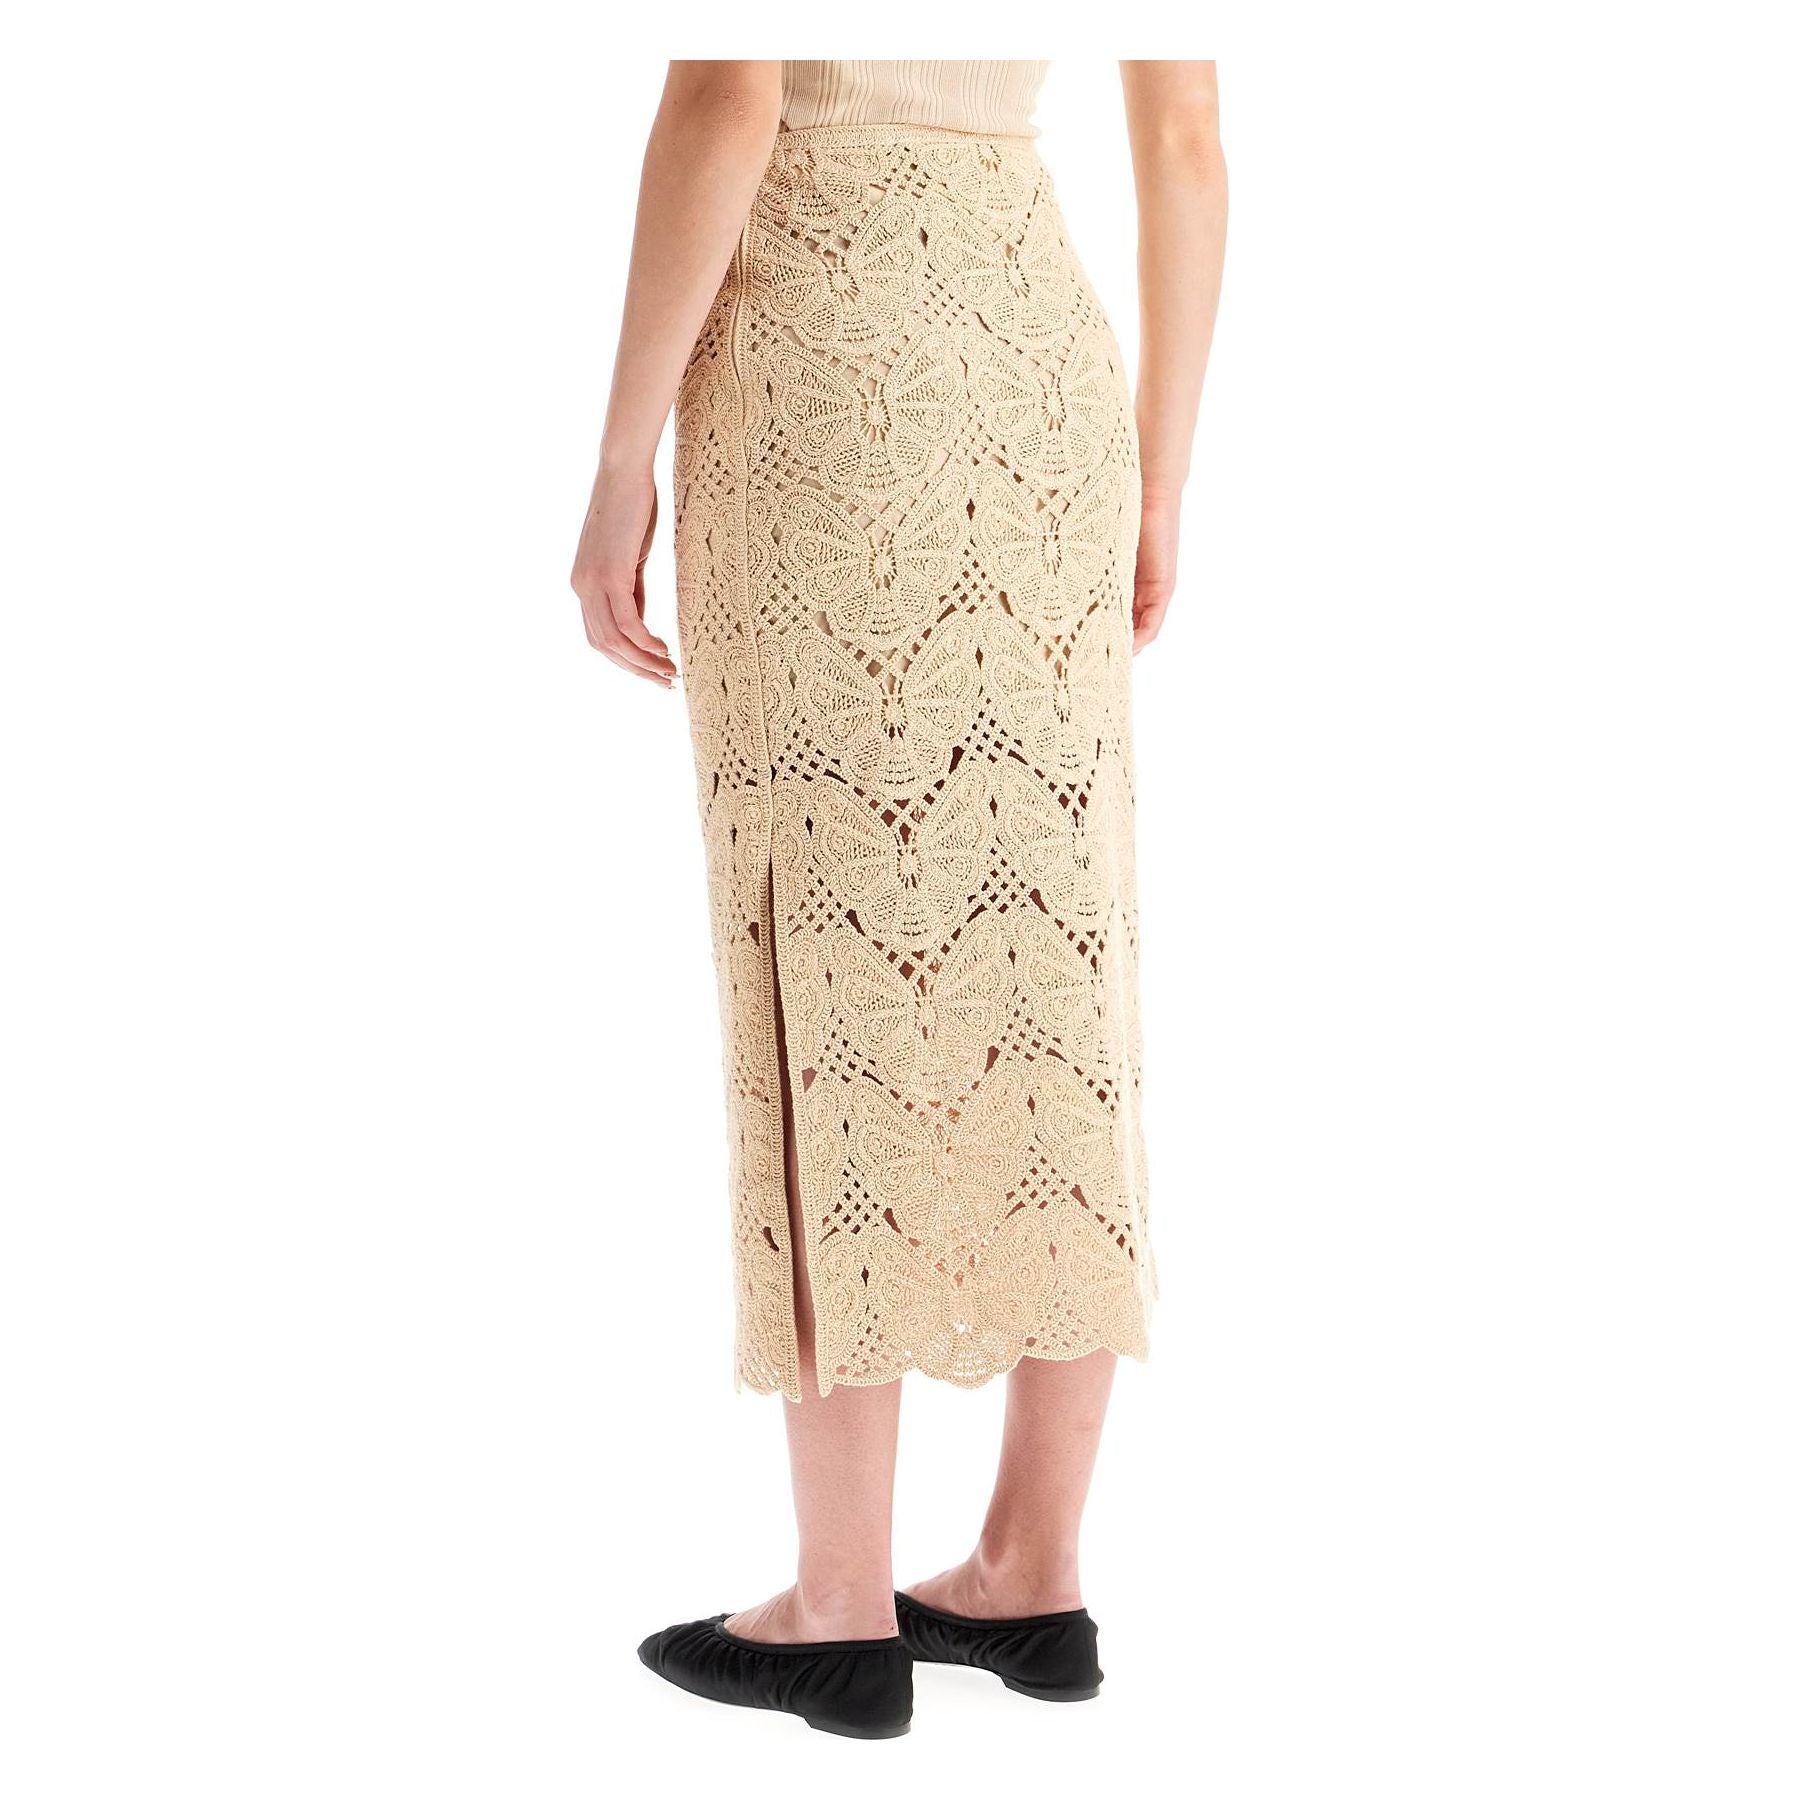 Cantala Crotchet Skirt